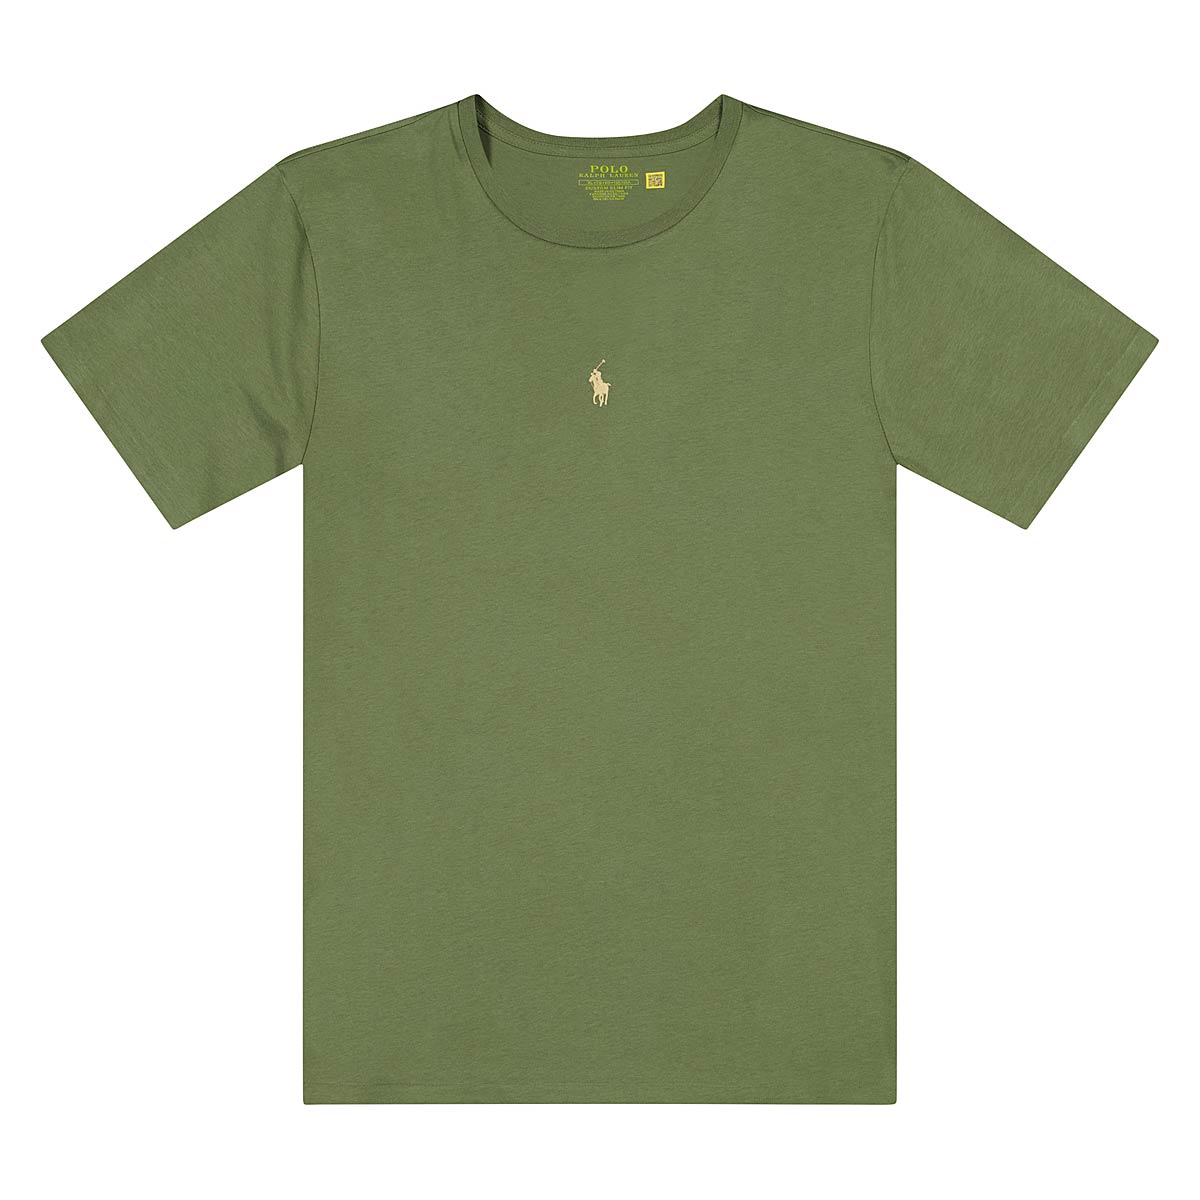 Polo Ralph Lauren Center Logo T-Shirt, Army Olive